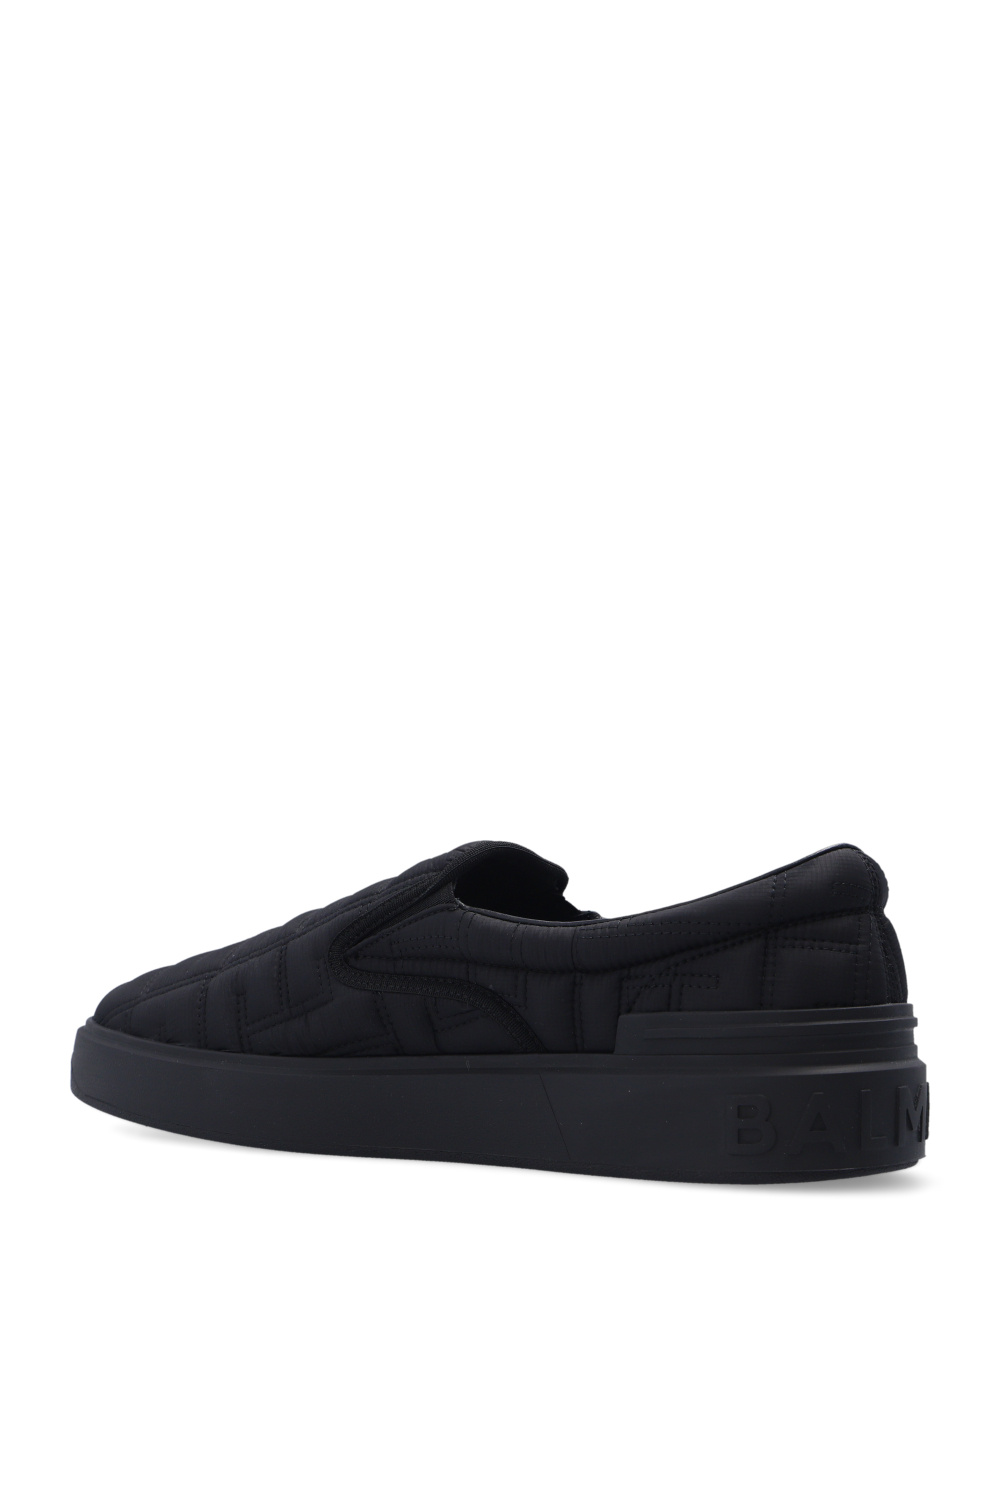 Balmain Slip-on shoes